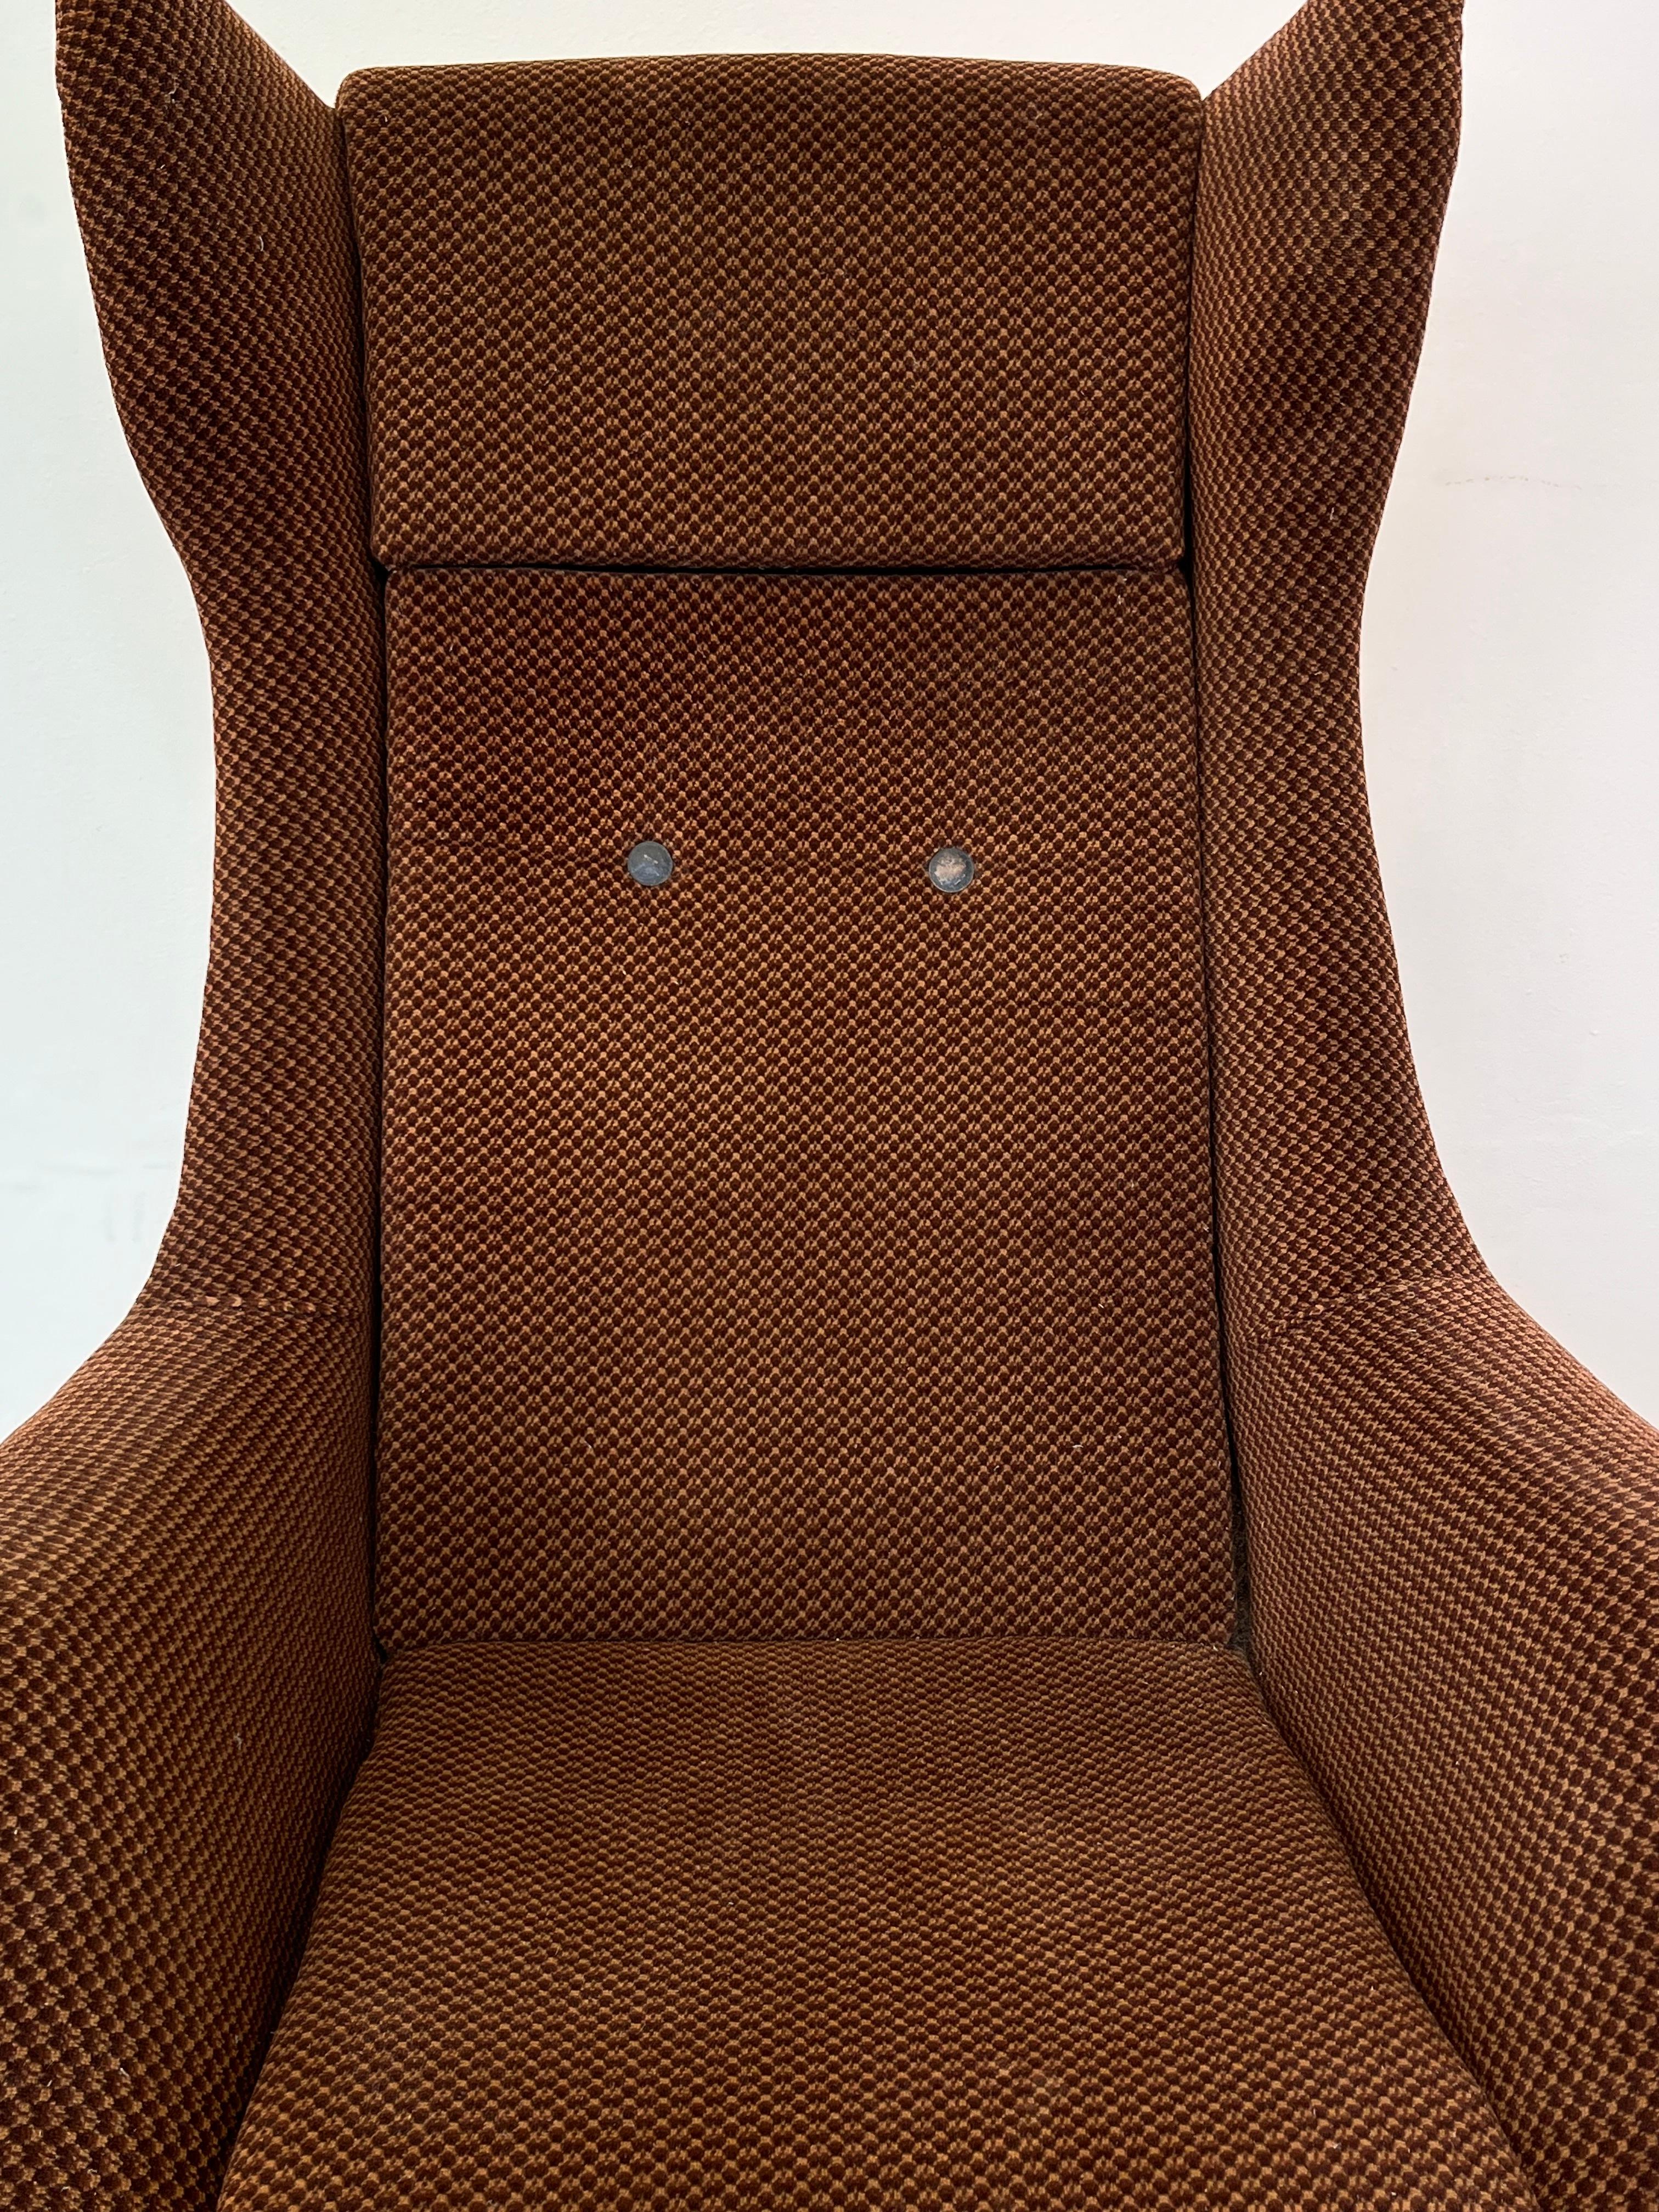 Mid-20th Century Original Design Fiberglass Wing Chair by Miroslav Navratil, 1970s For Sale